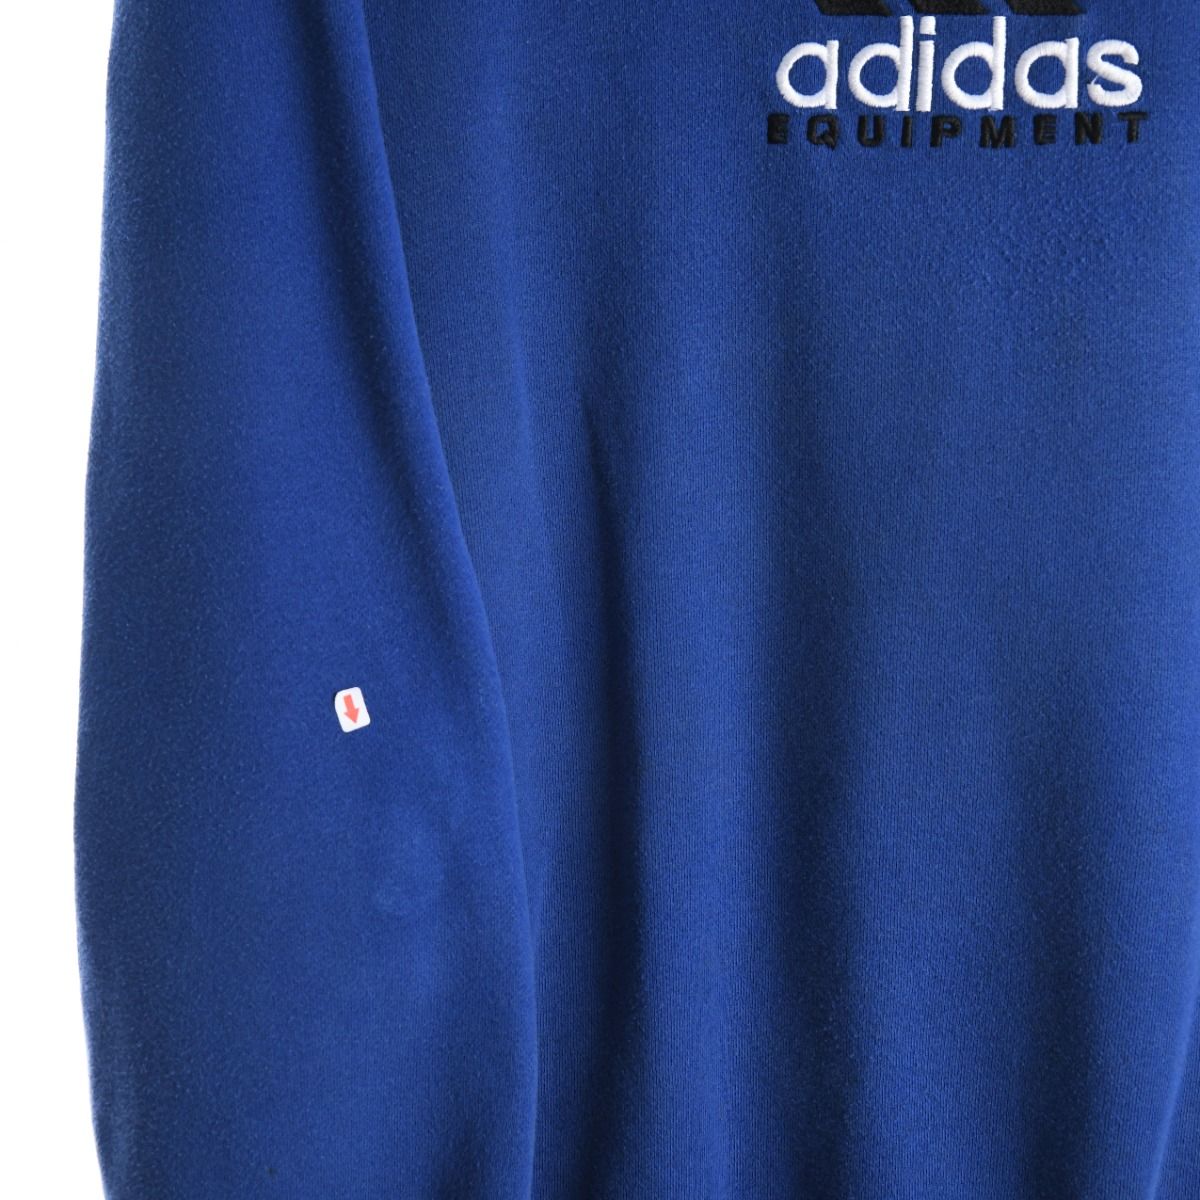 Adidas Equipment 1990s Sweatshirt